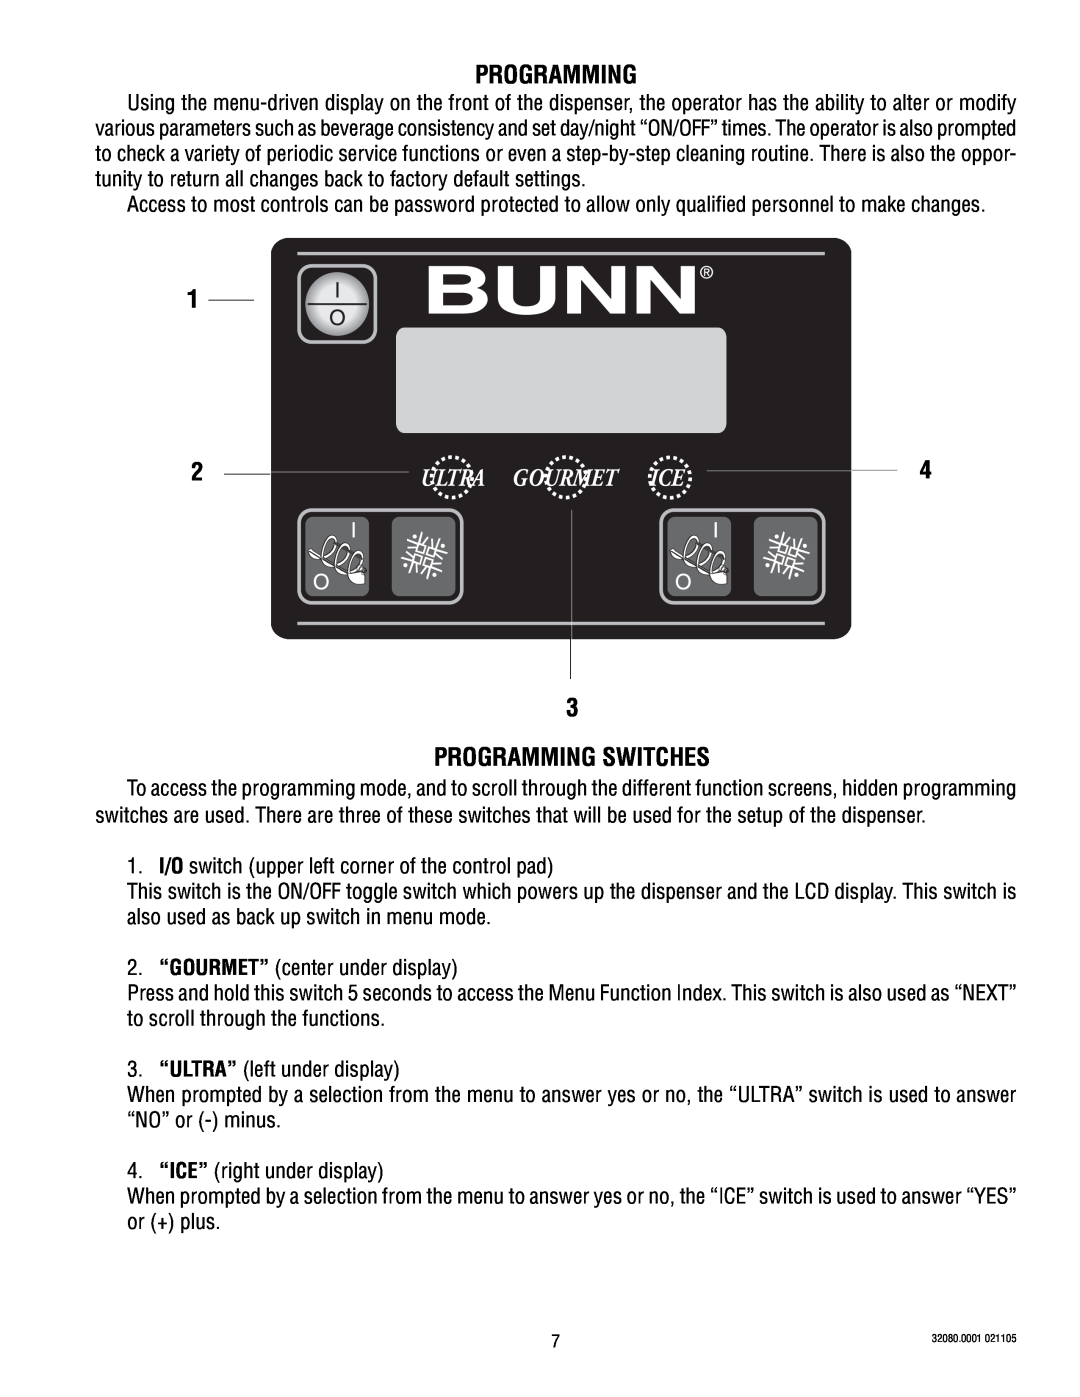 Bunn 2 manual Programming Switches 